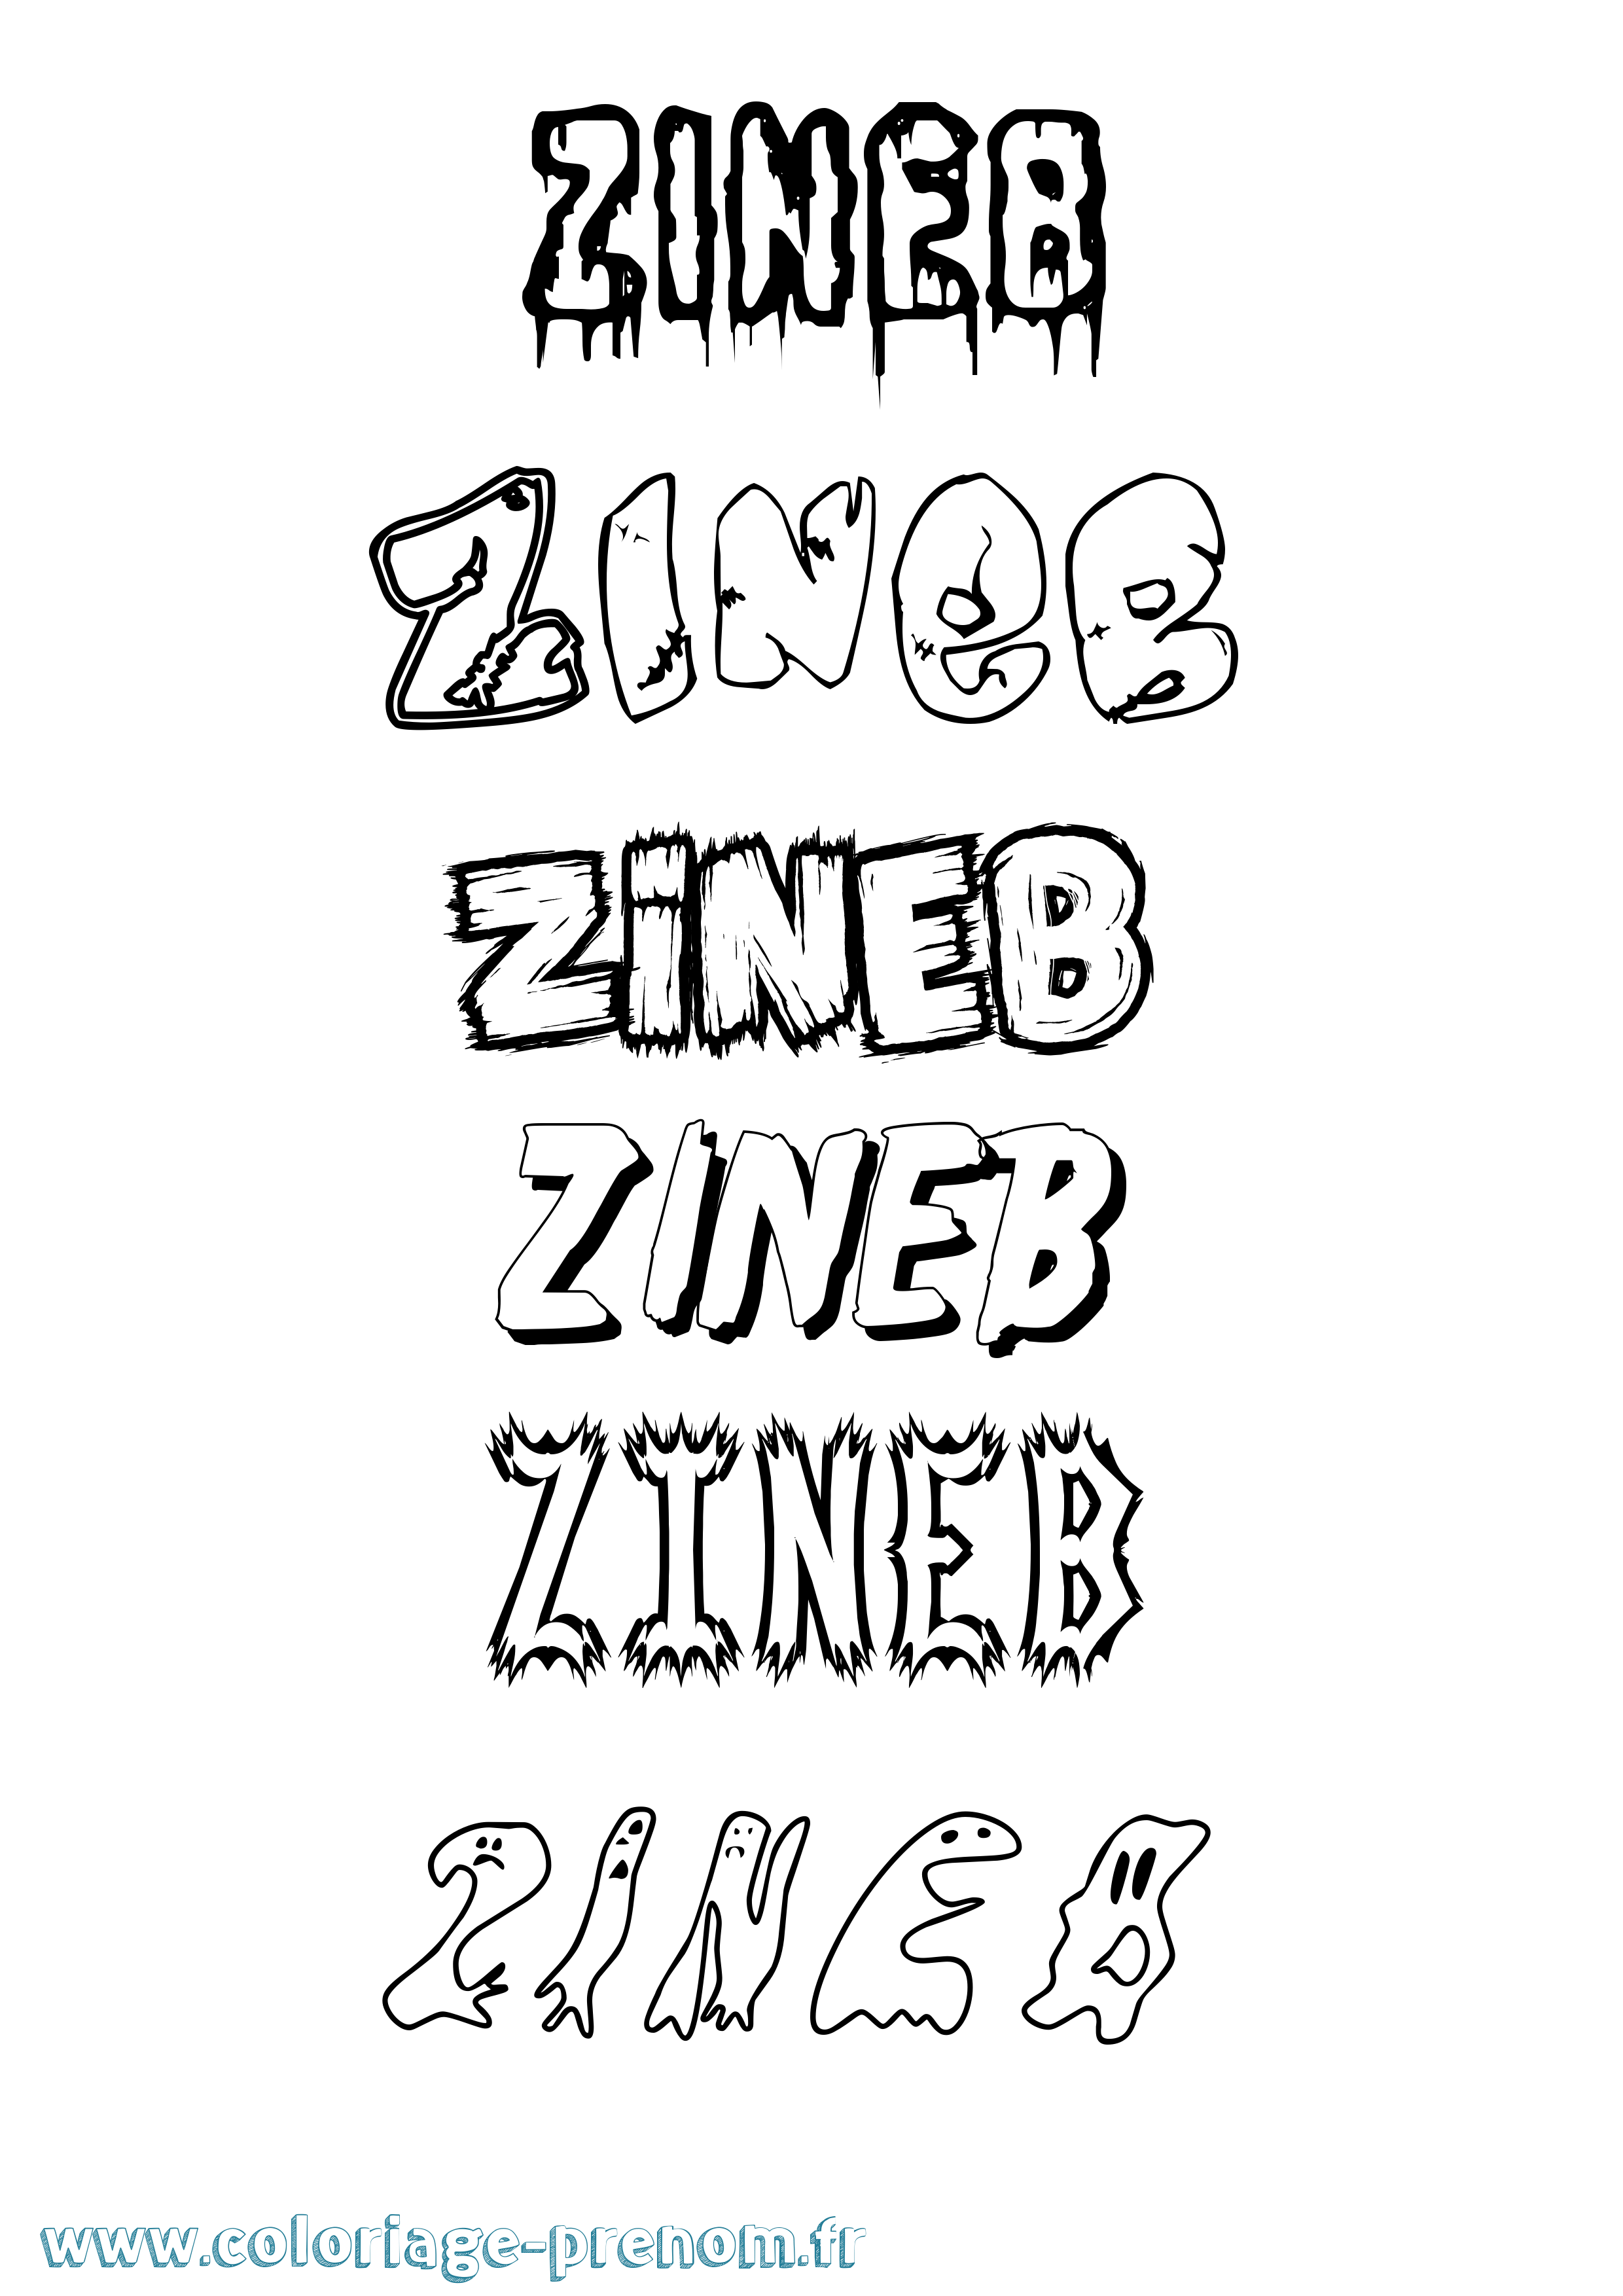 Coloriage prénom Zineb